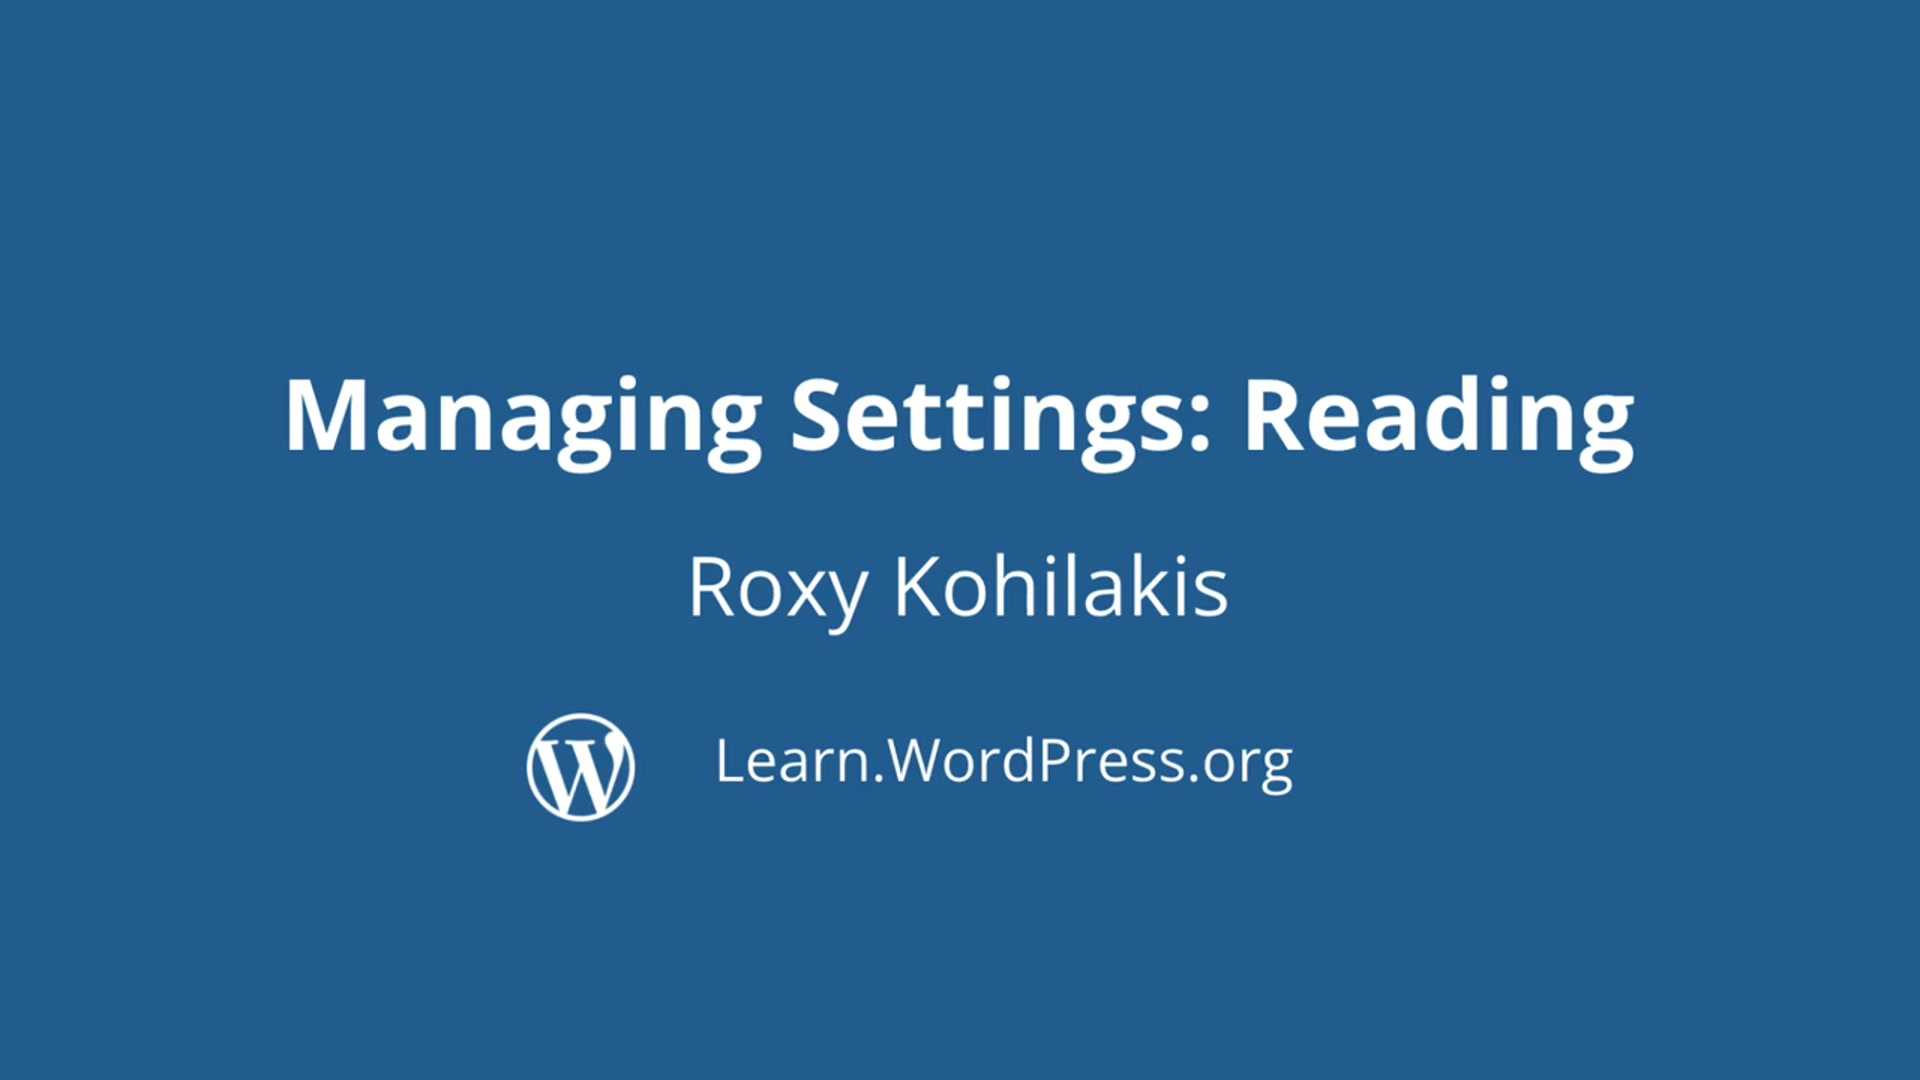 Roxy Kohilakis: Managing Reading Settings